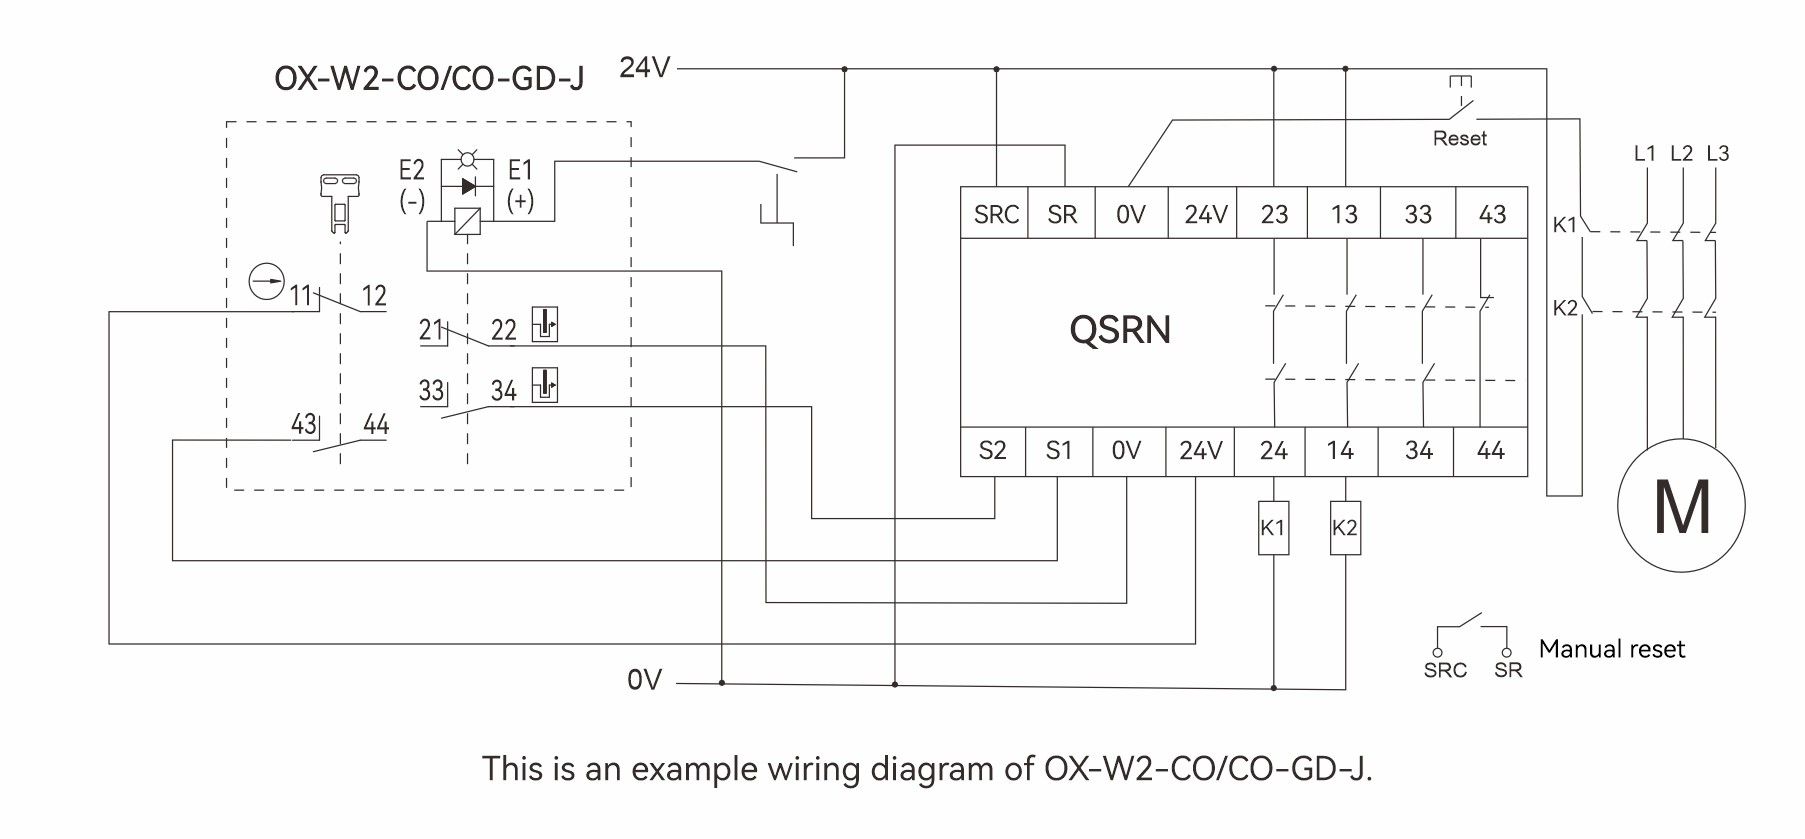 DADISICK Safety Interlock Switches and QSRN Wiring Diagram